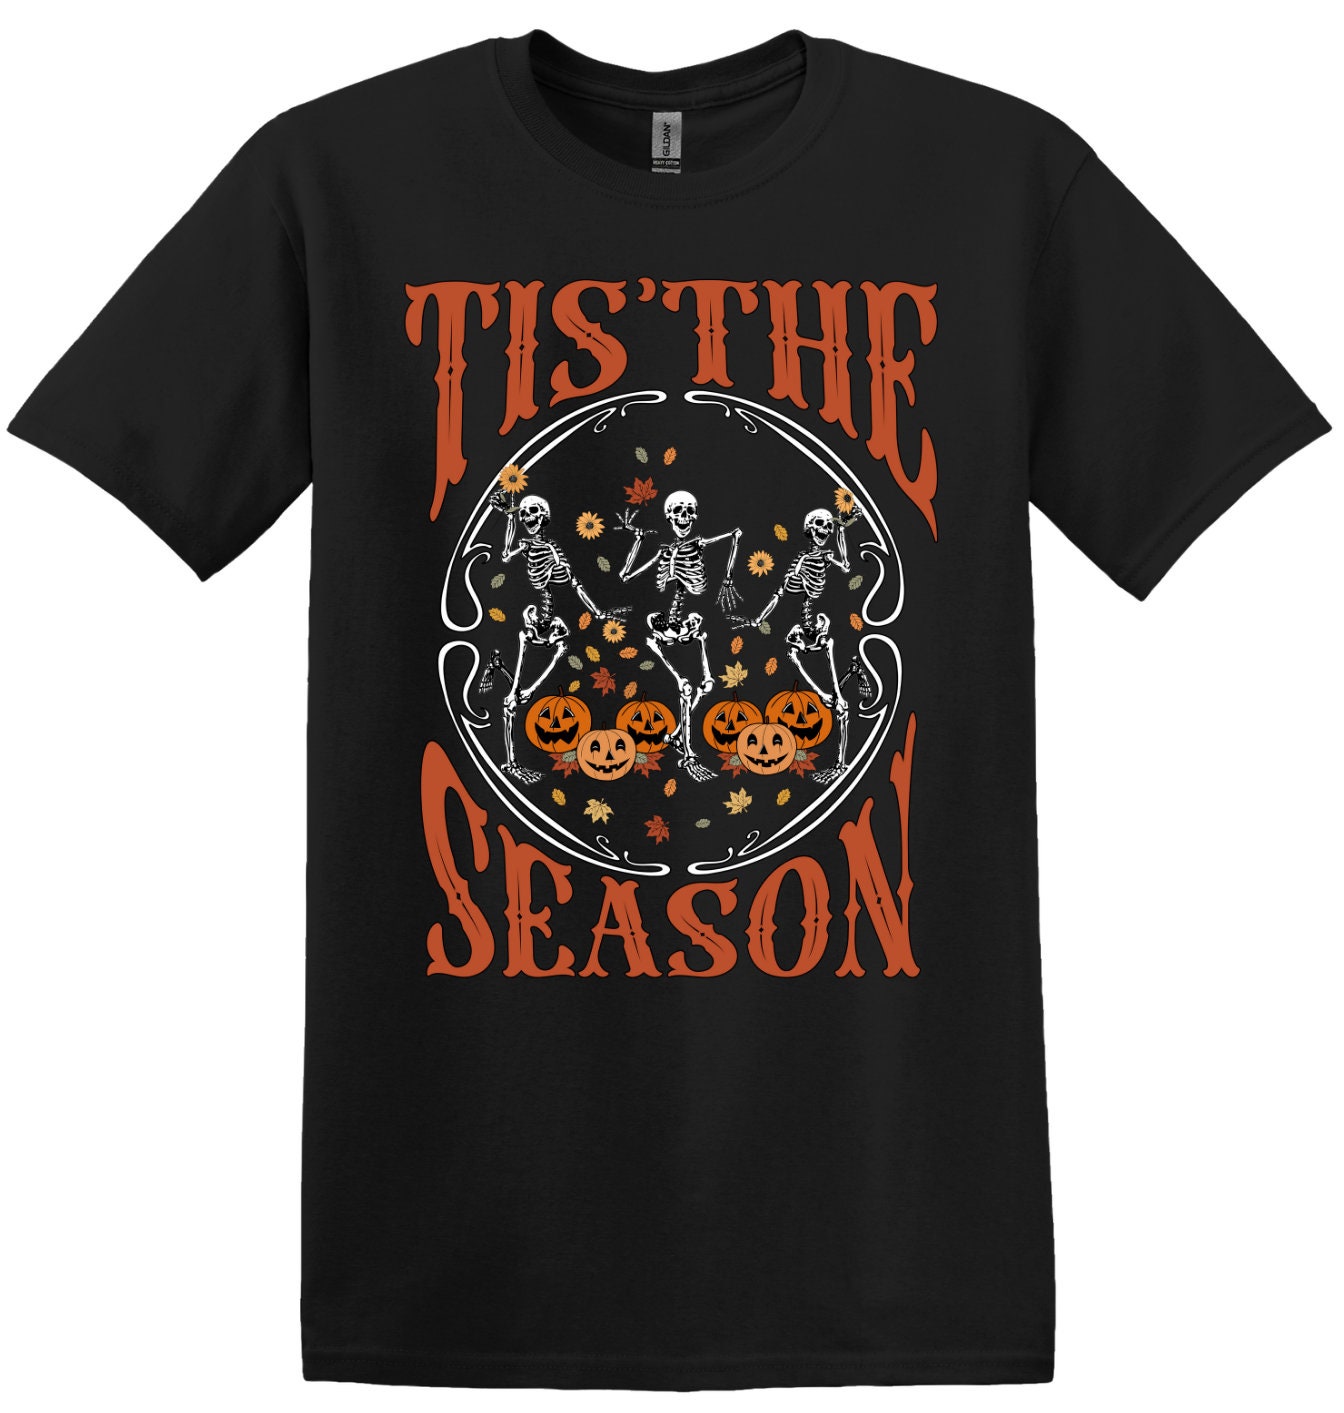 Tis The Season; Spooky Season; Fall Long Sleeve & Short Sleeve Cotton Adult Tee